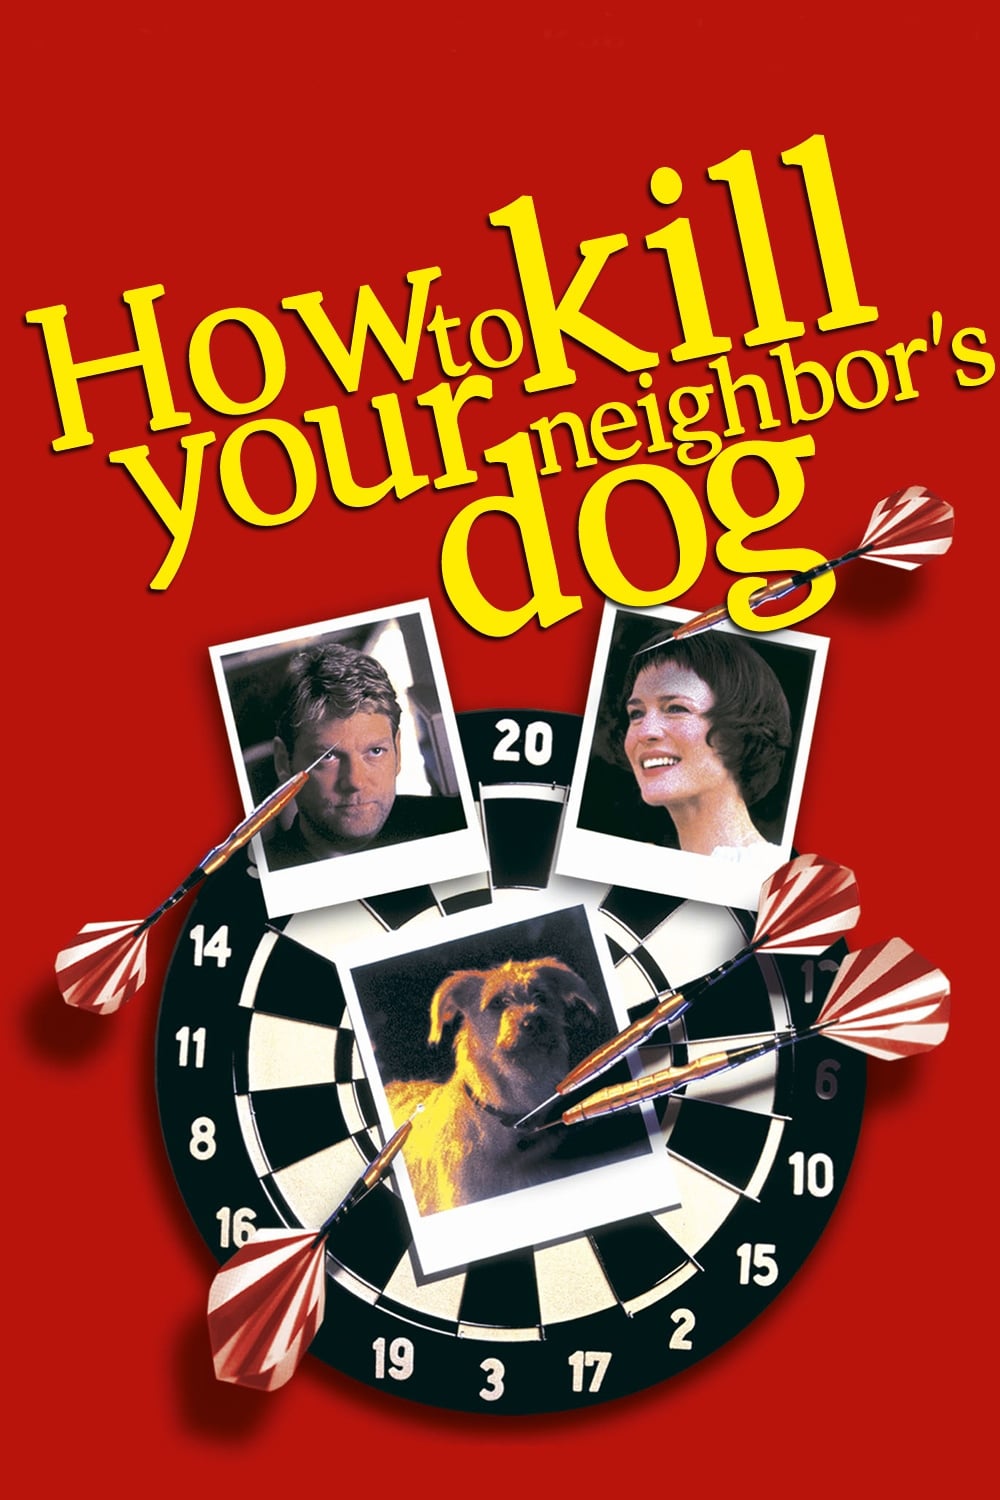 How to Kill Your Neighbor's Dog (2002)